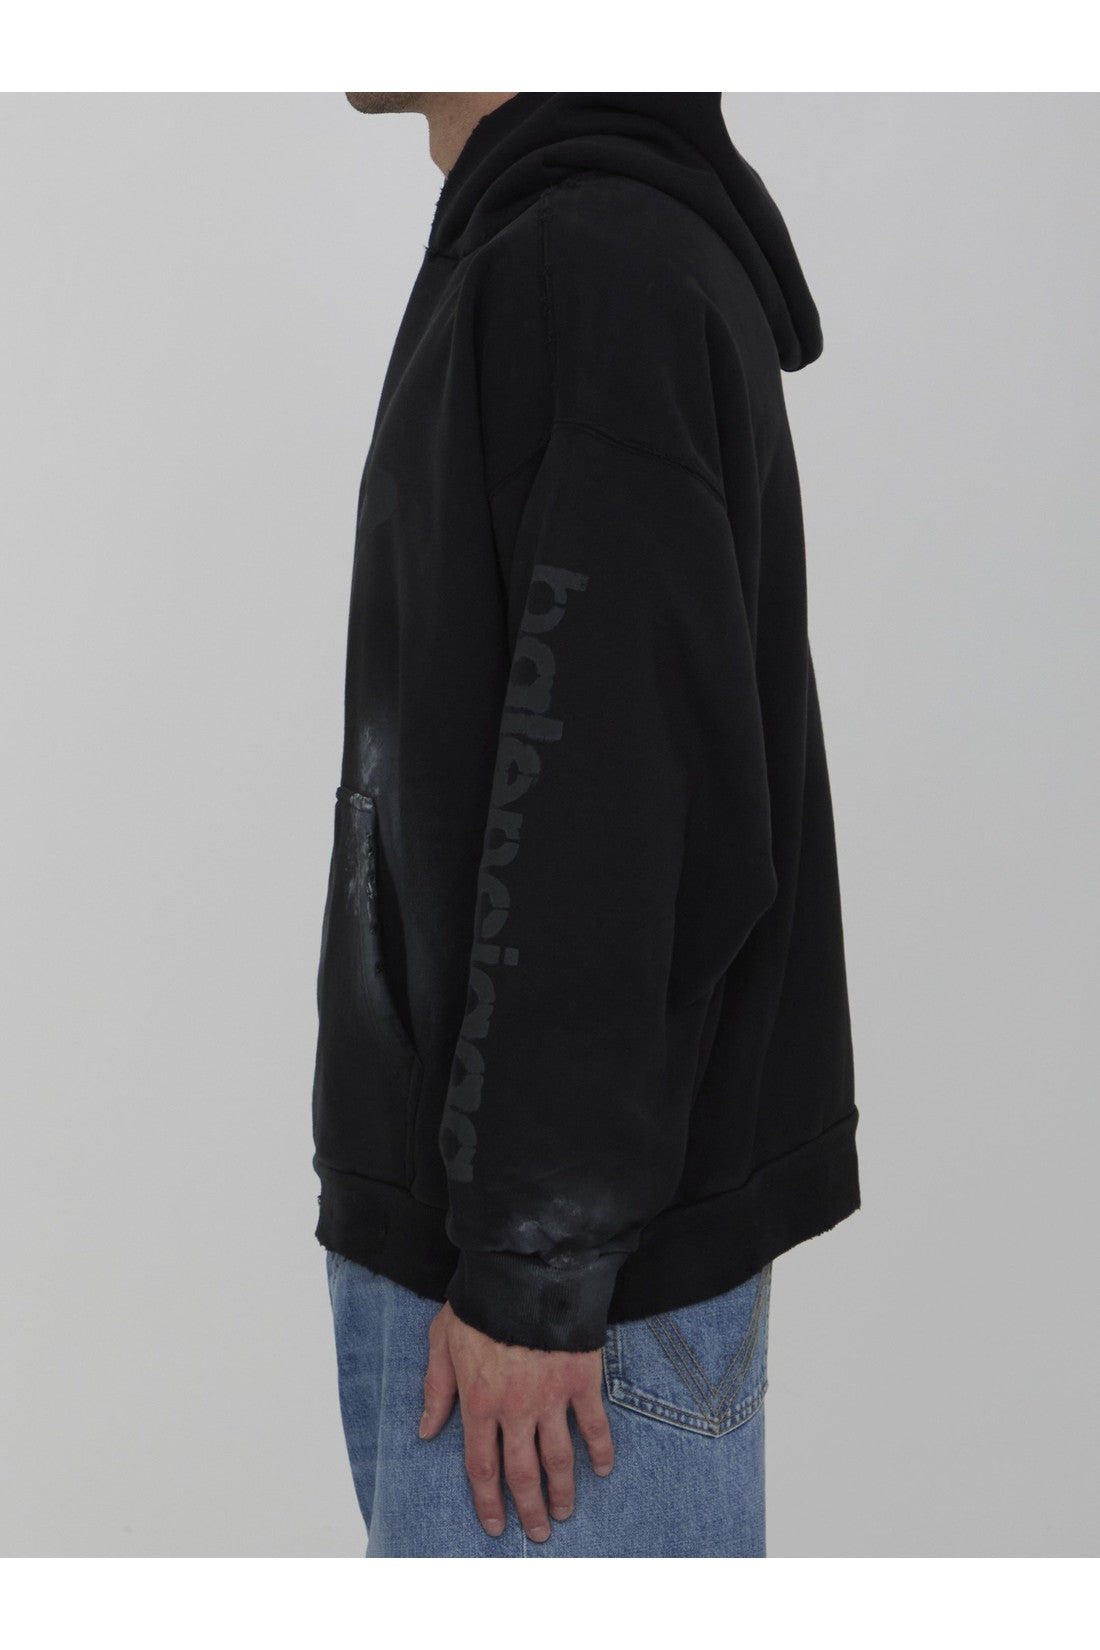 3B Stencil hoodie